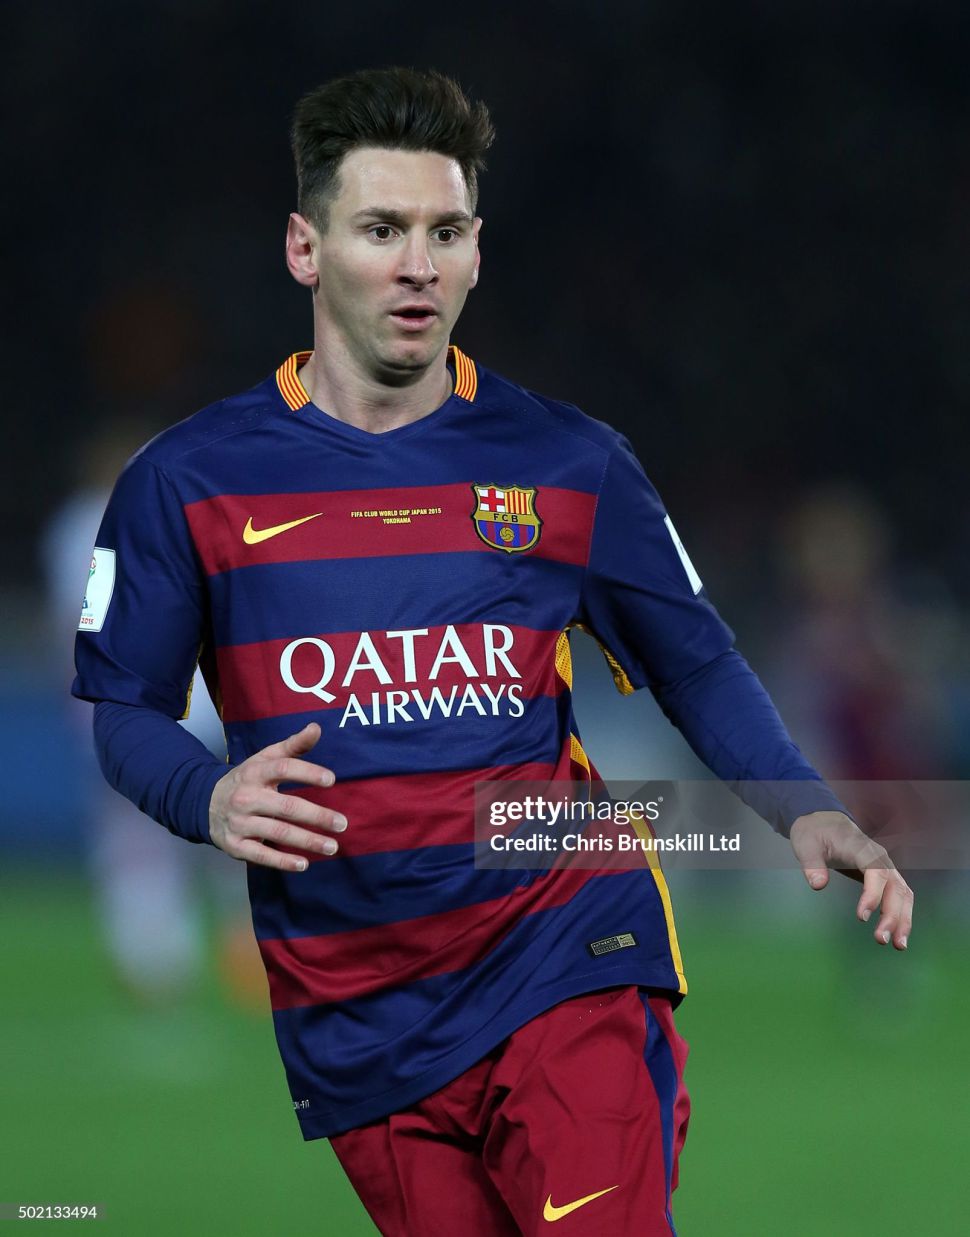 Font Messi 10 Barcelona 2015 2016 nameset home player official